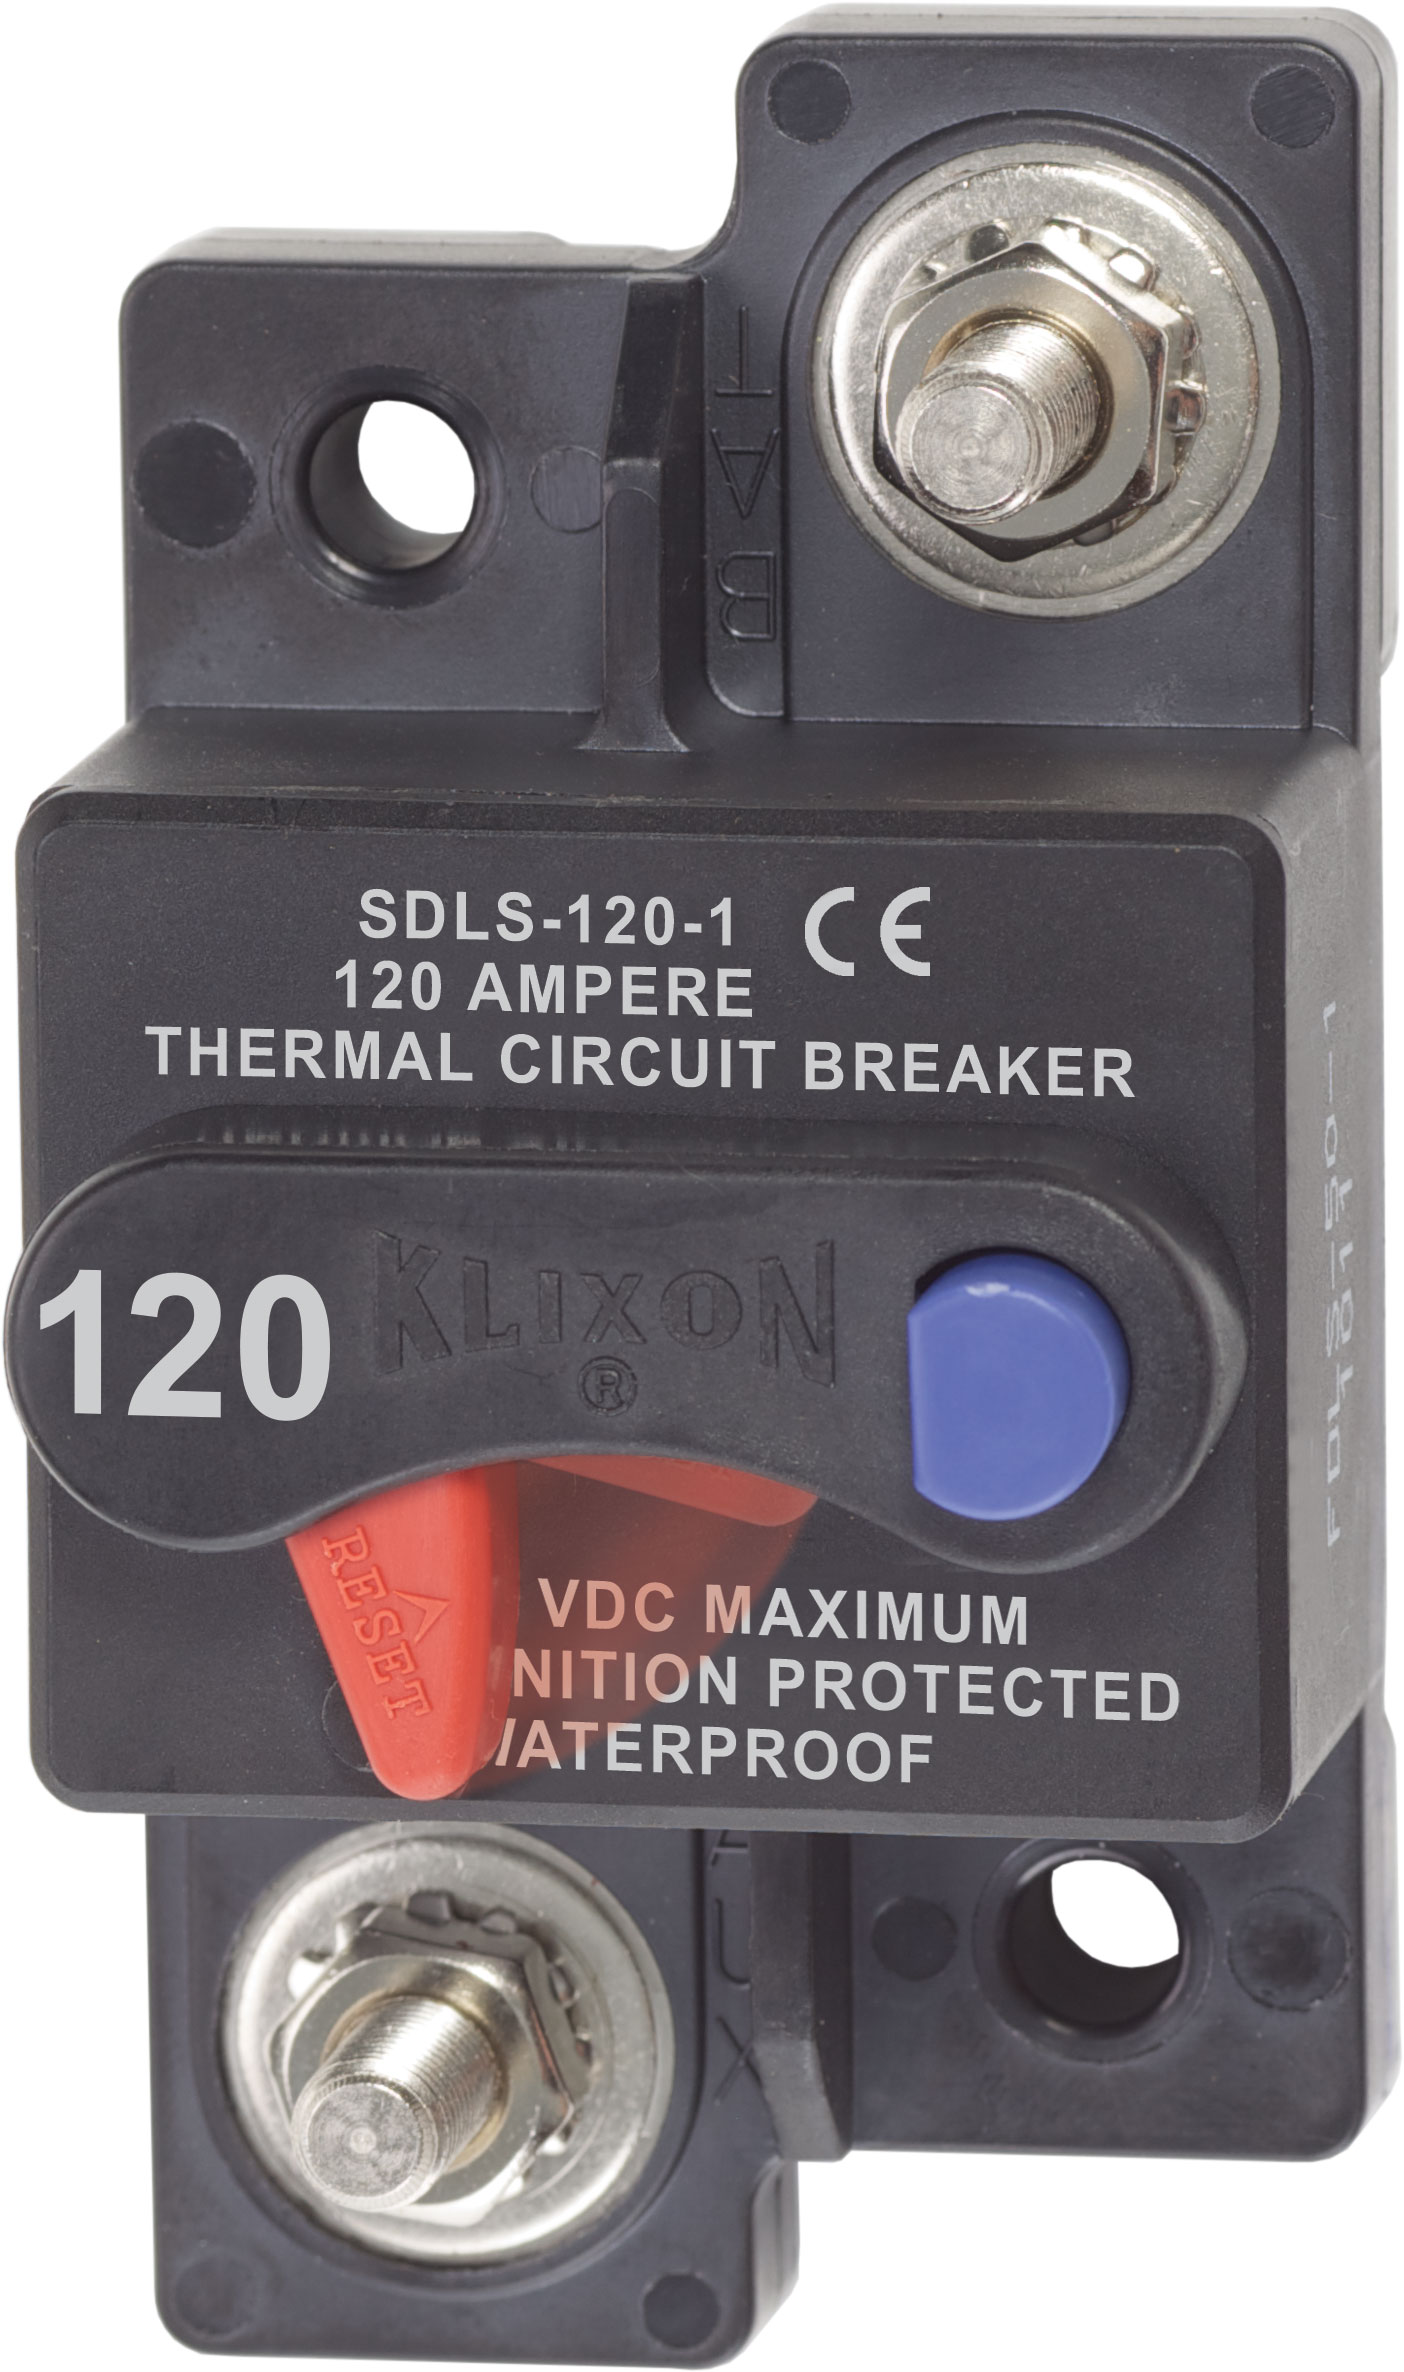 Part# 7178  Manufacturer Blue Sea Systems  Part Type Circuit Breaker